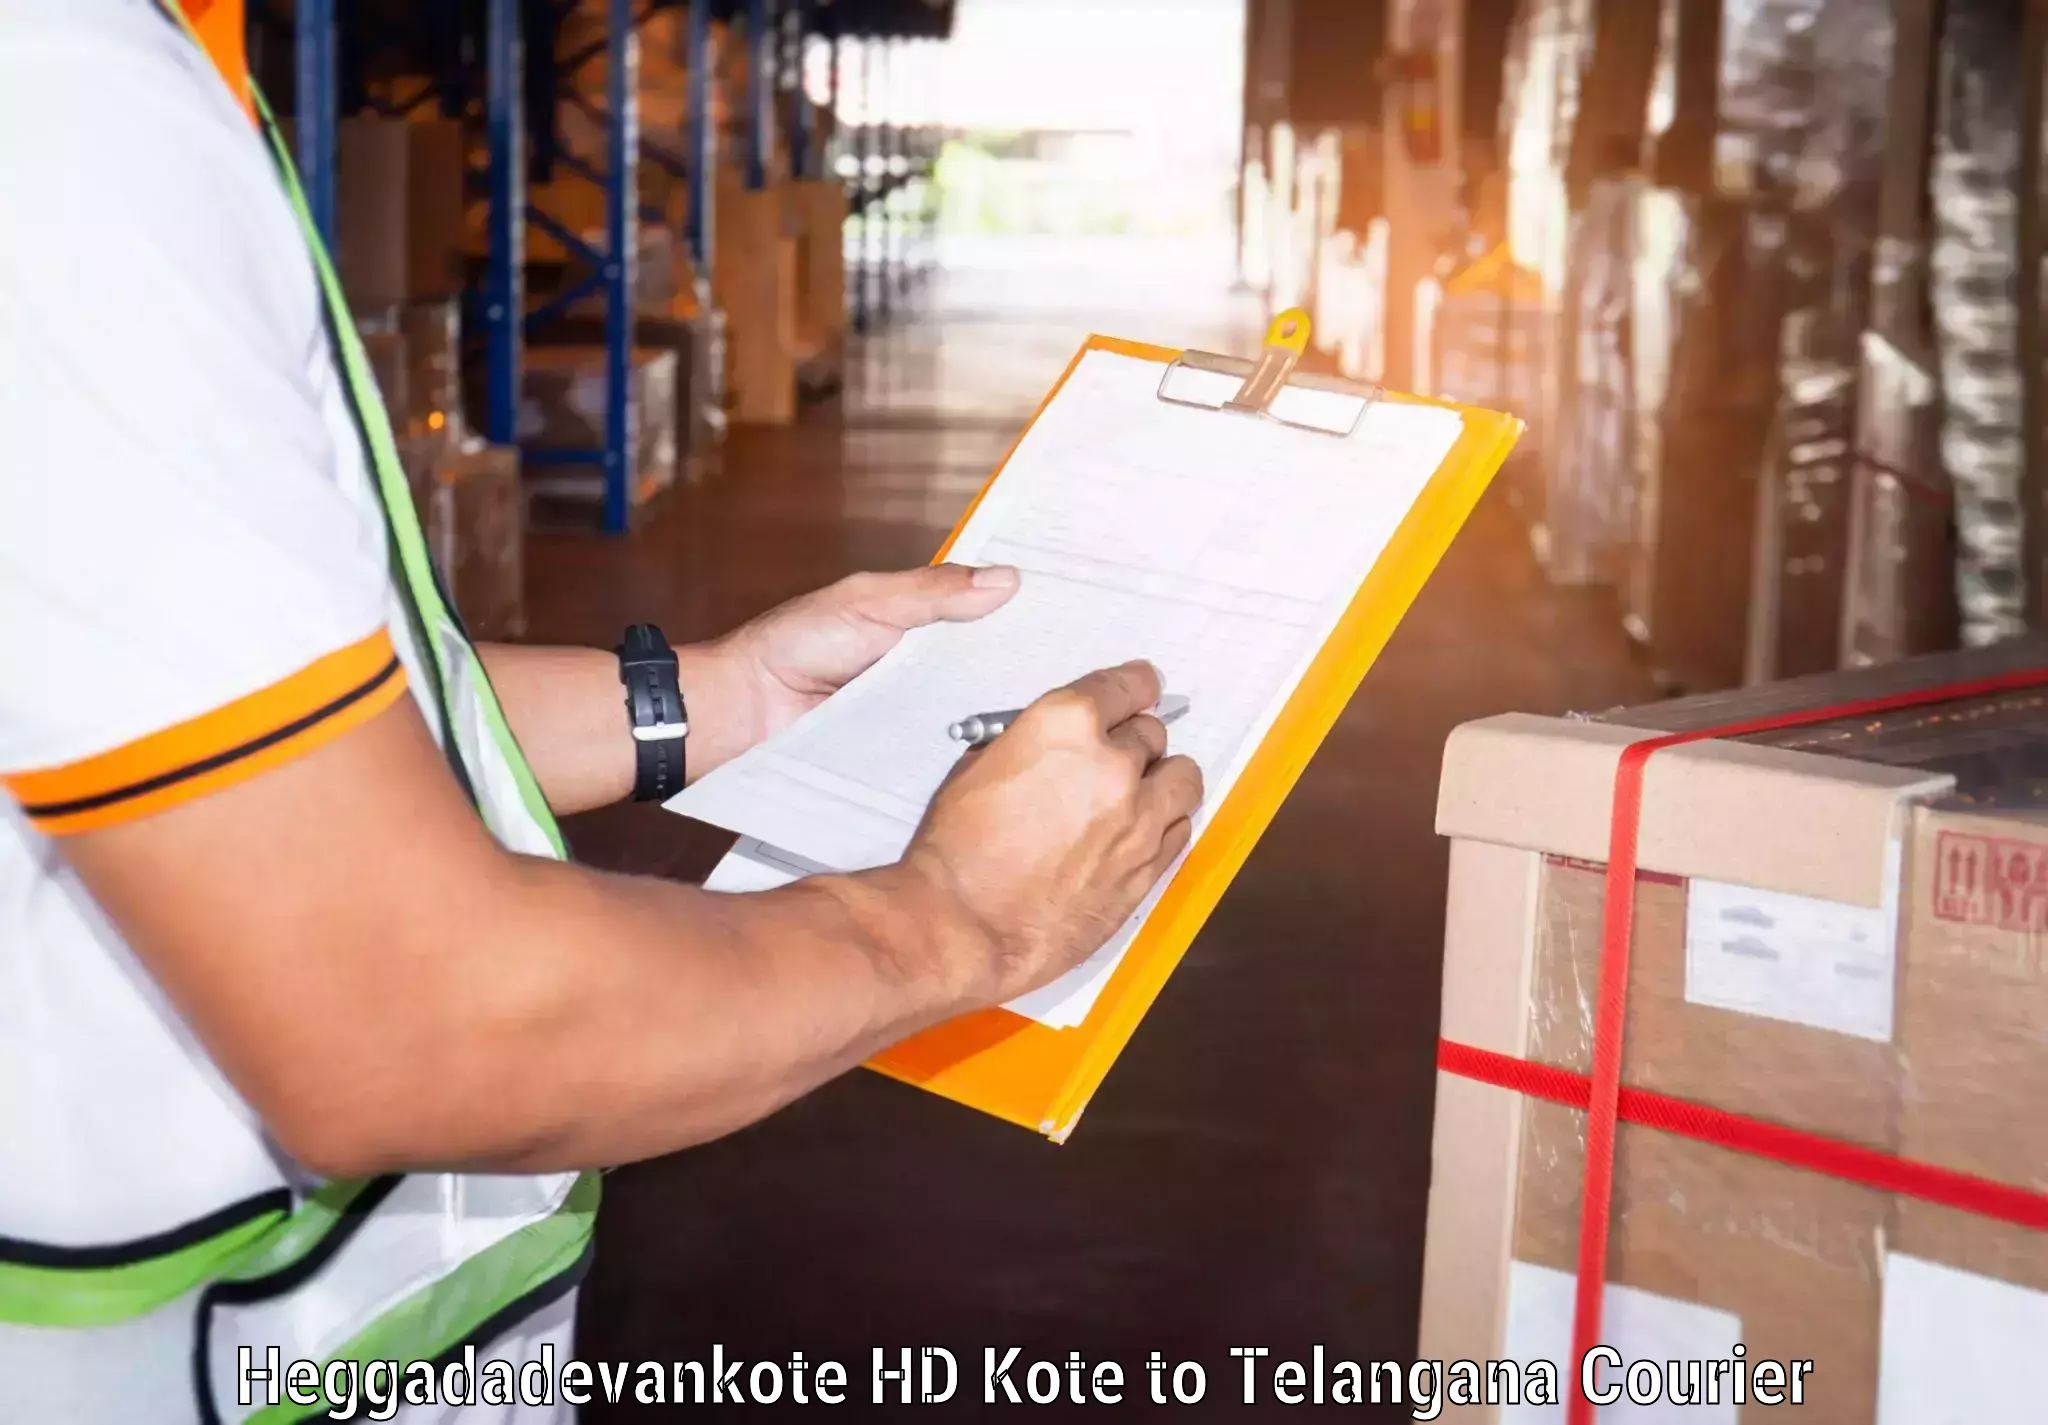 Advanced shipping services Heggadadevankote HD Kote to Yellandu